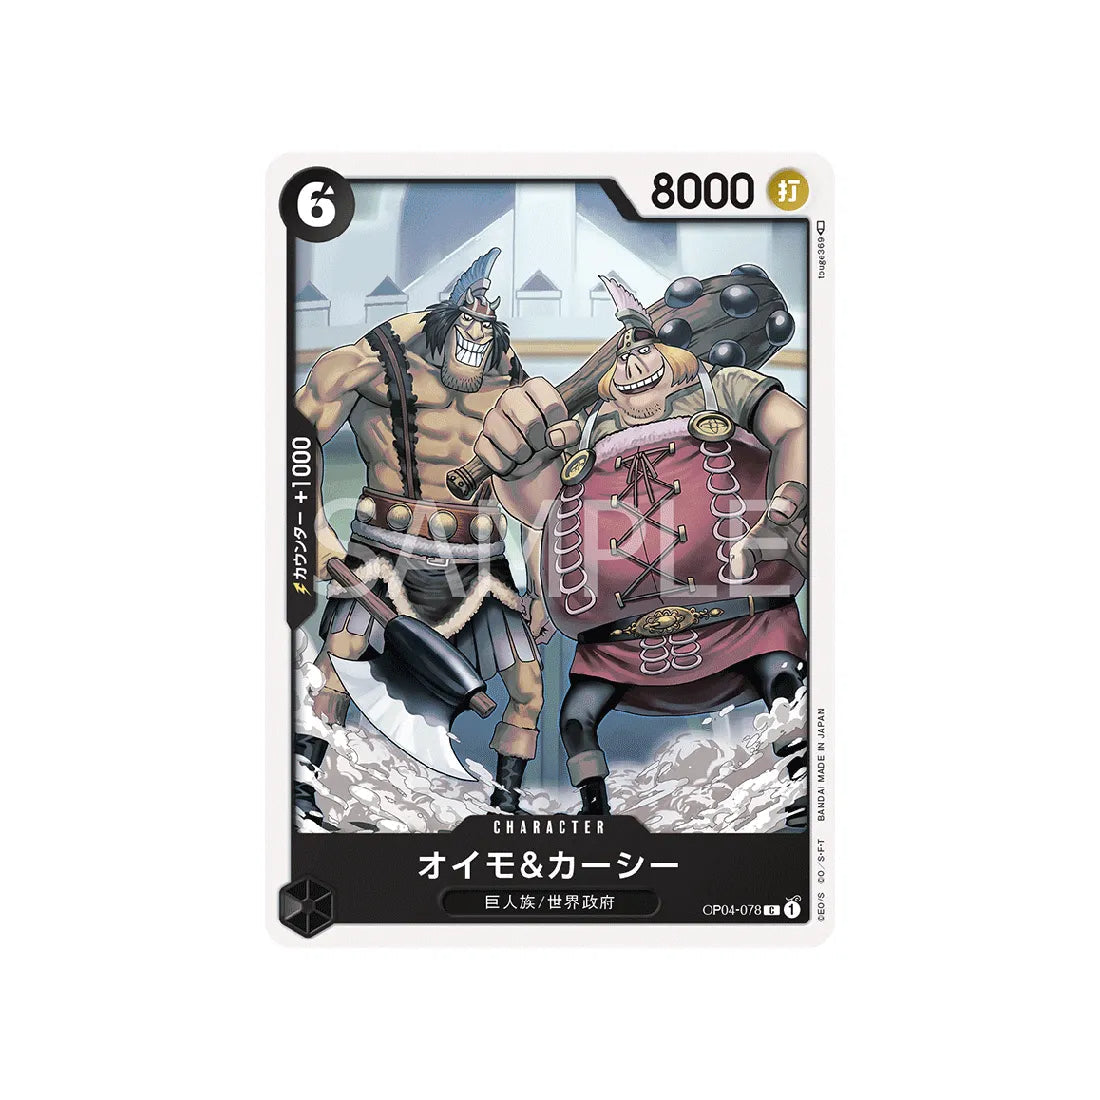 carte-one-piece-card-kingdoms-of-intrigue-op04-078-oimo-&-kashii-c